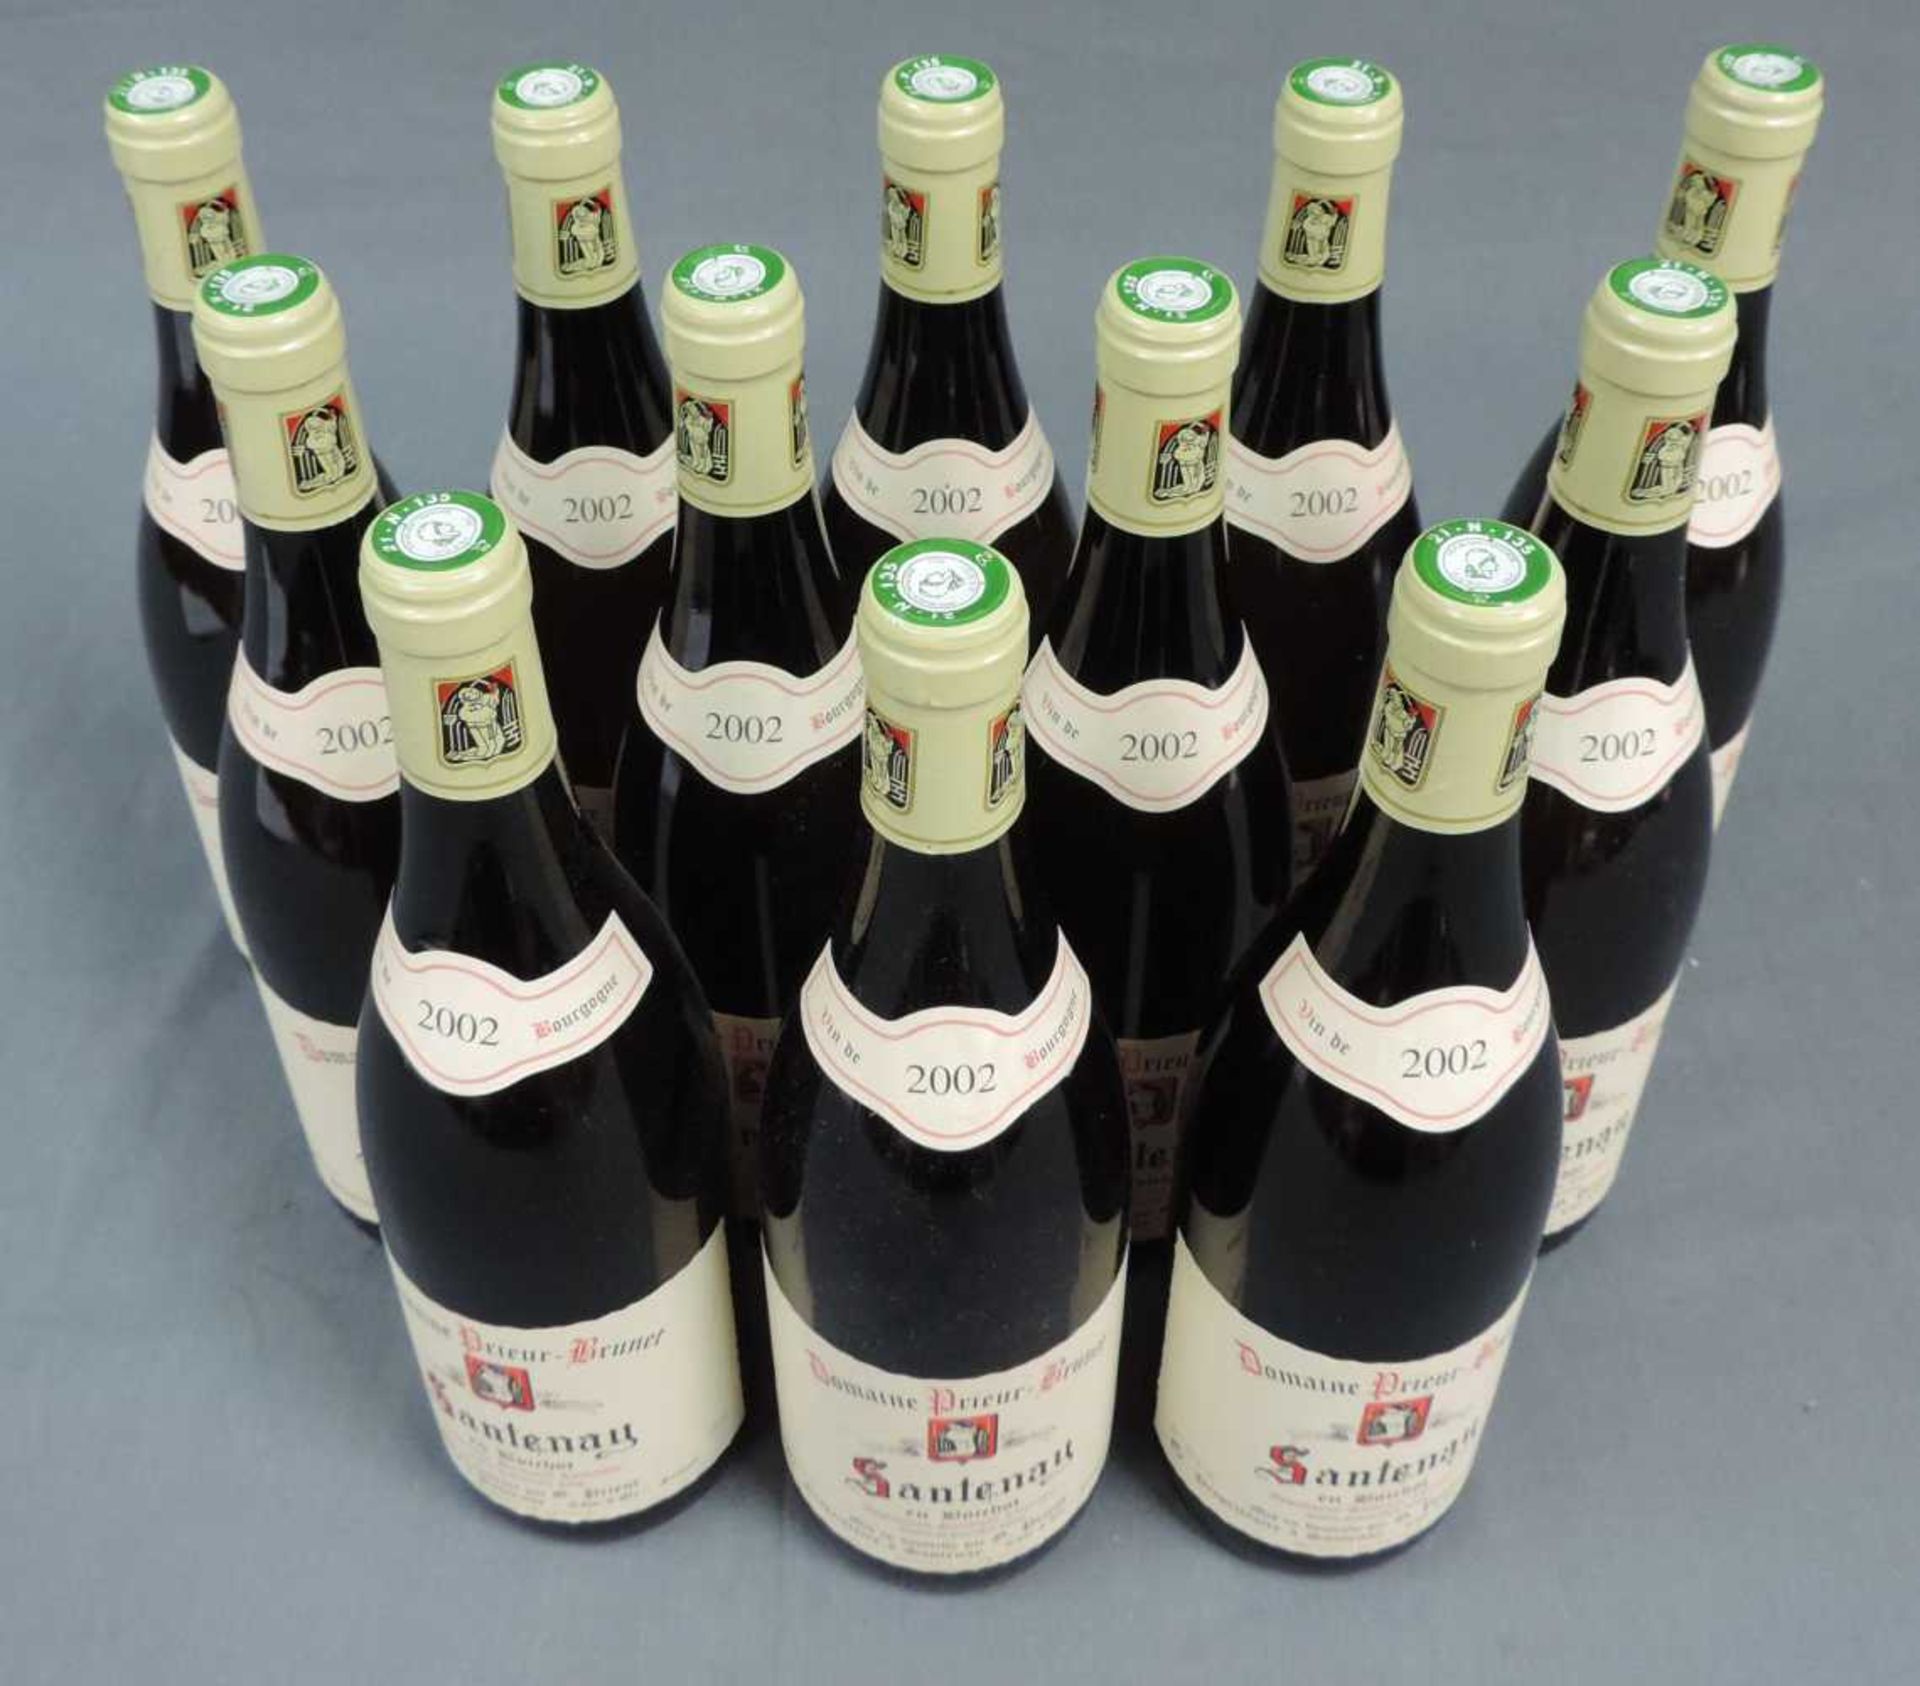 2002 Domaine Prieur - Brunet, Satenay en Boichot, France. 12 Flaschen, 750 ml, Alc., 13% by vol. AC. - Image 3 of 6